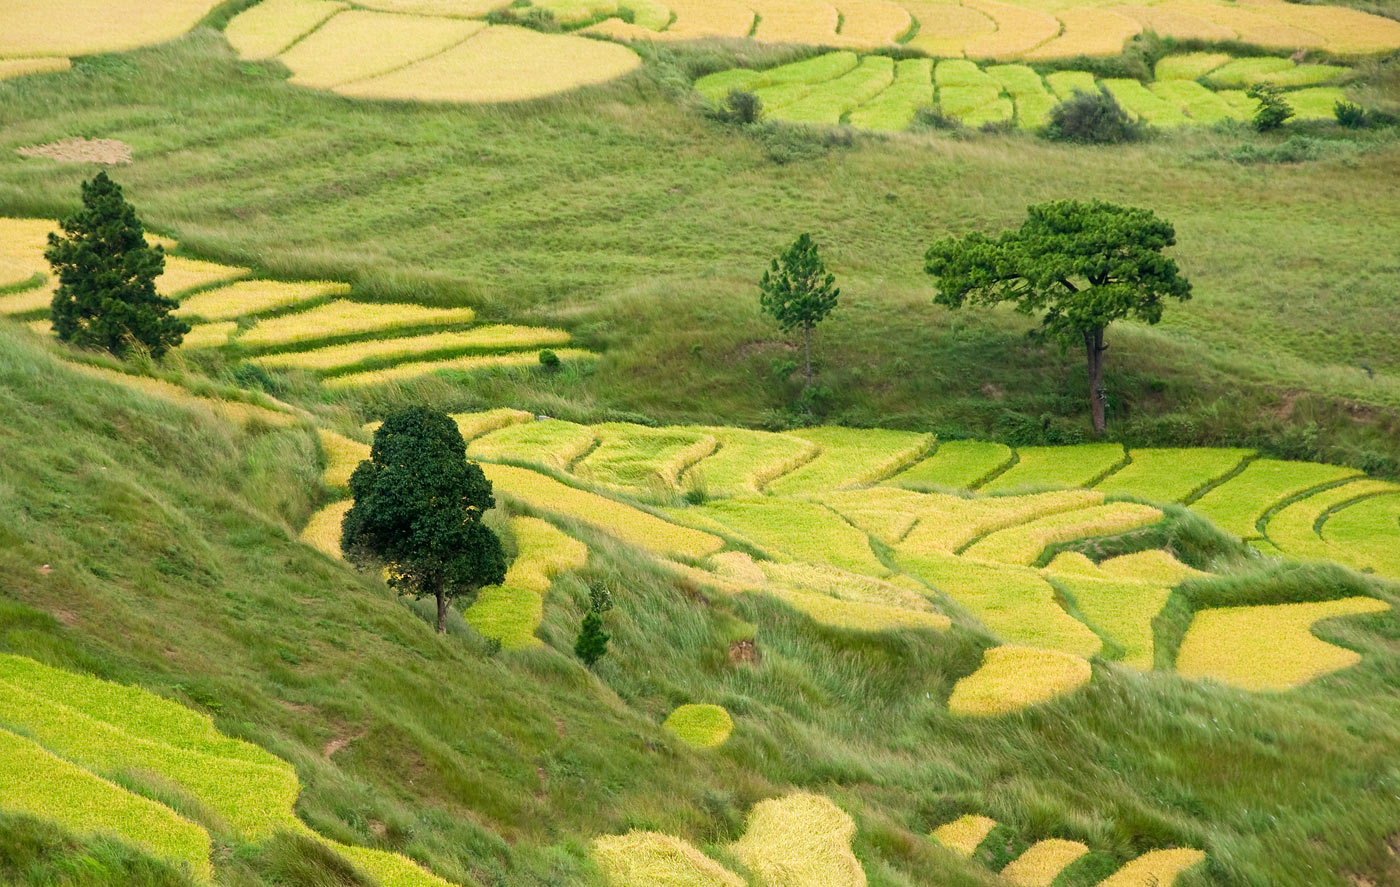 Rice fields during harvest season, Wangdue, 2010